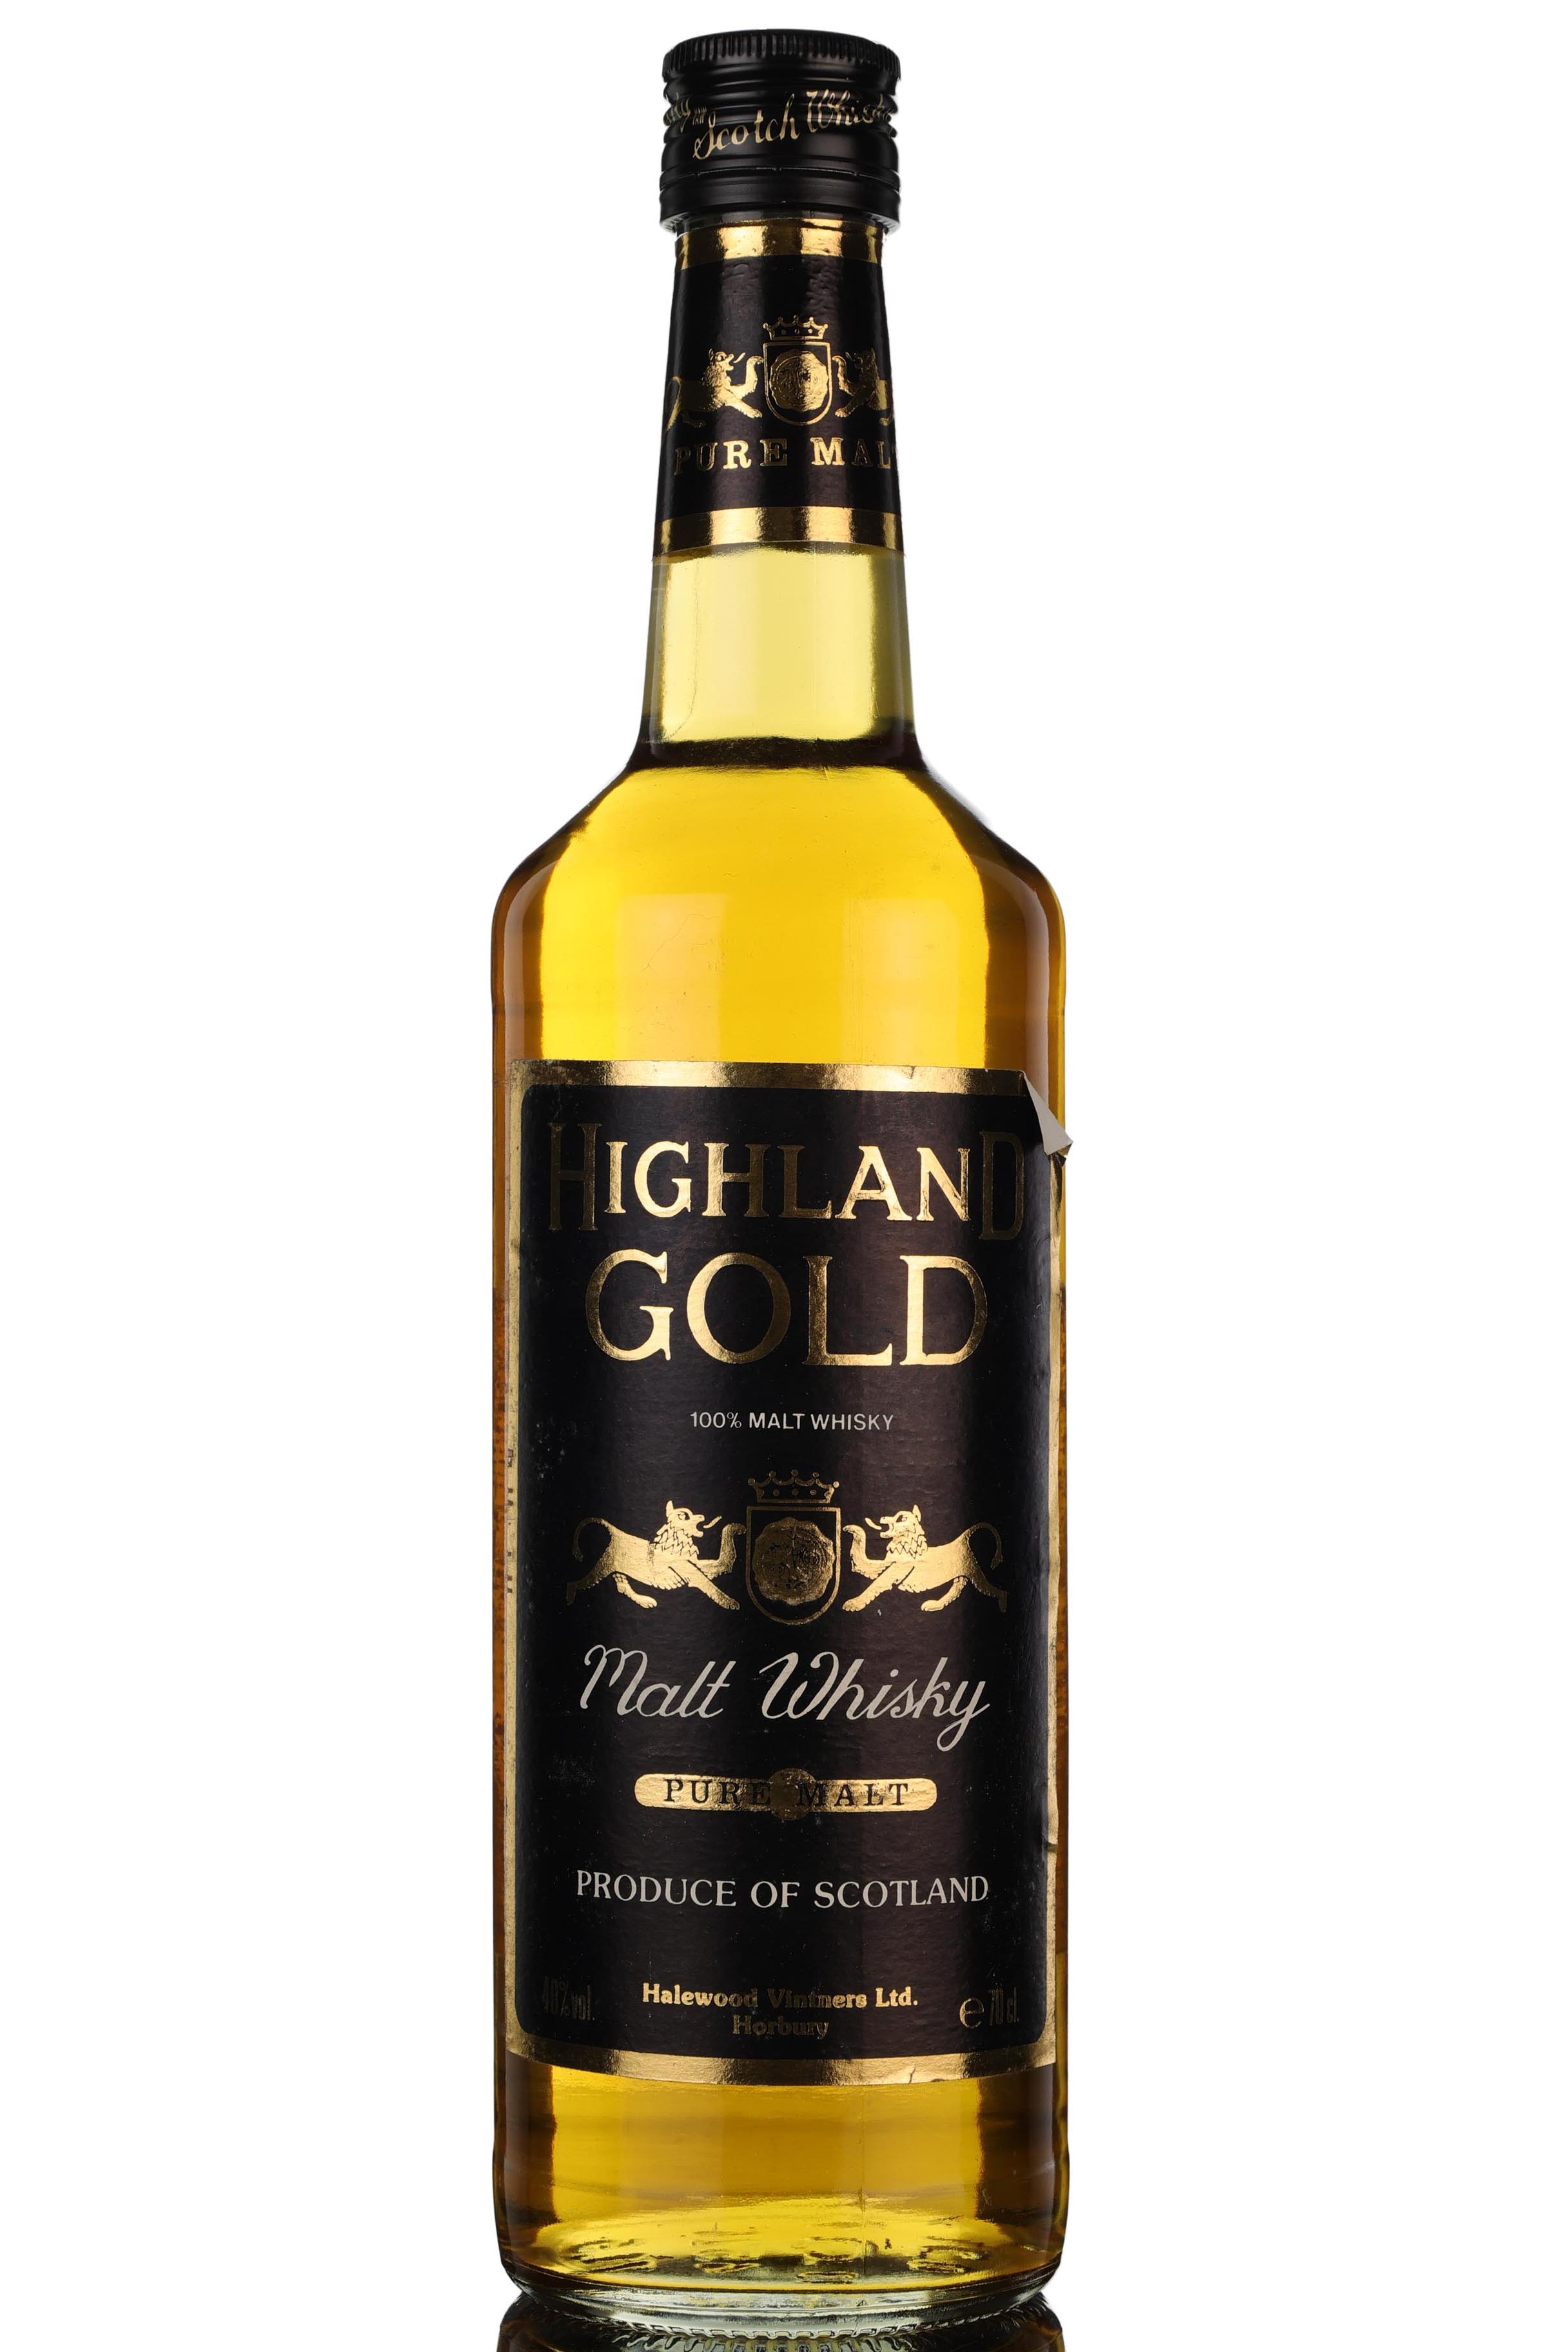 Highland Gold - Pure Malt - 1990s